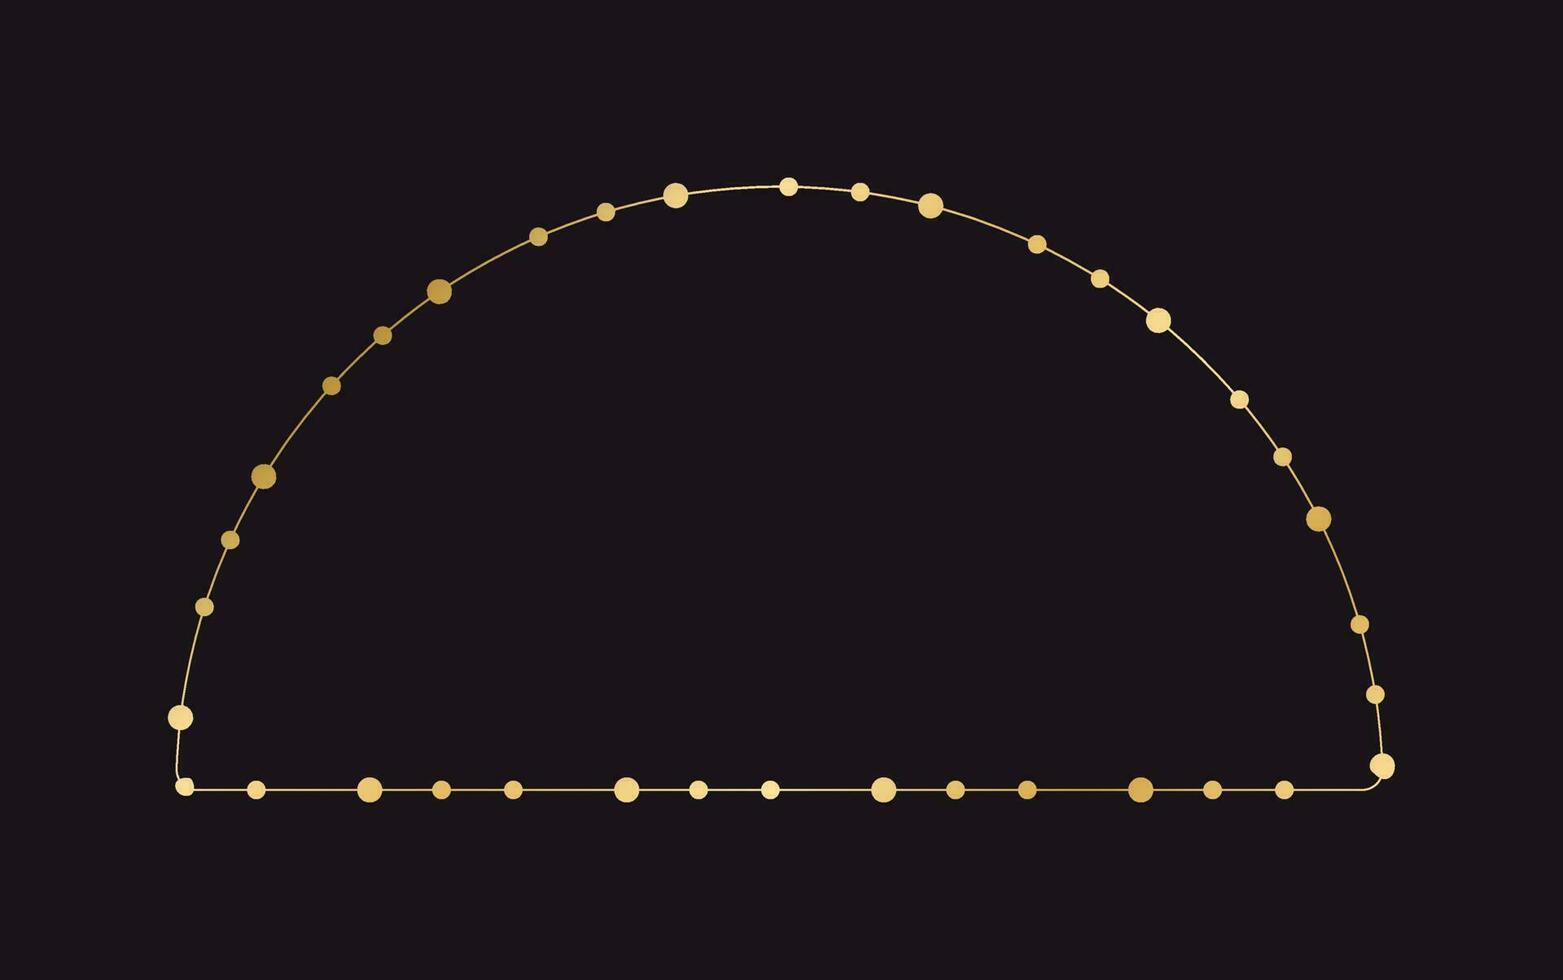 abstrakt geometrisch golden Punkte Kreis Muster rahmen. Gold Weihnachten Fee Beleuchtung Rahmen Grenze. vektor